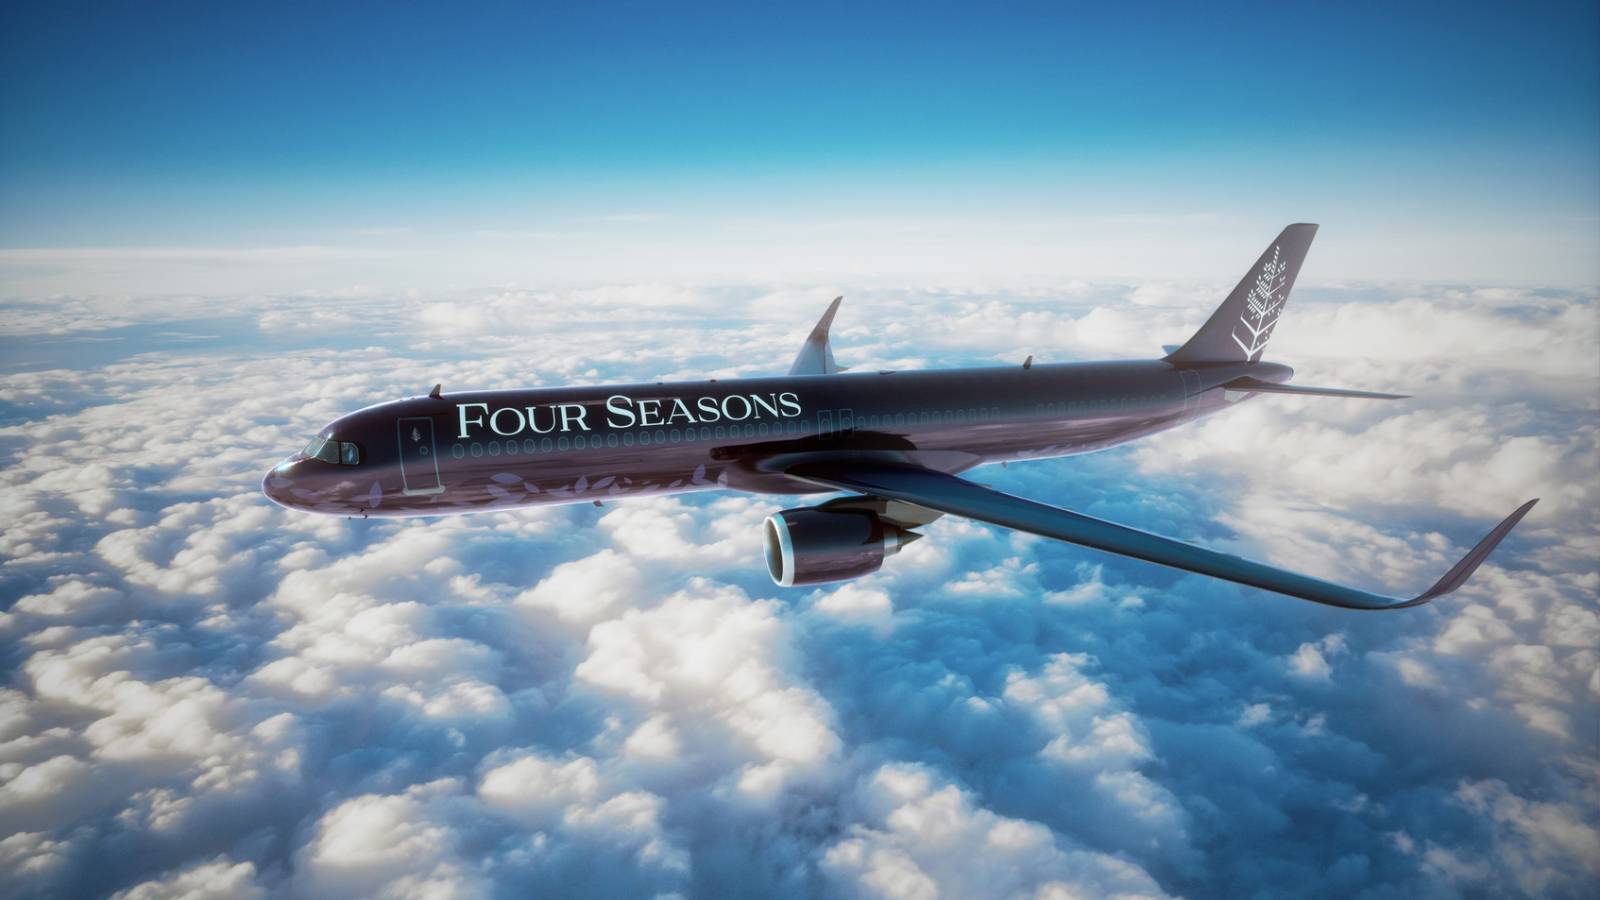 El lujoso jet de Four Seasons aterriza por primera vez en España